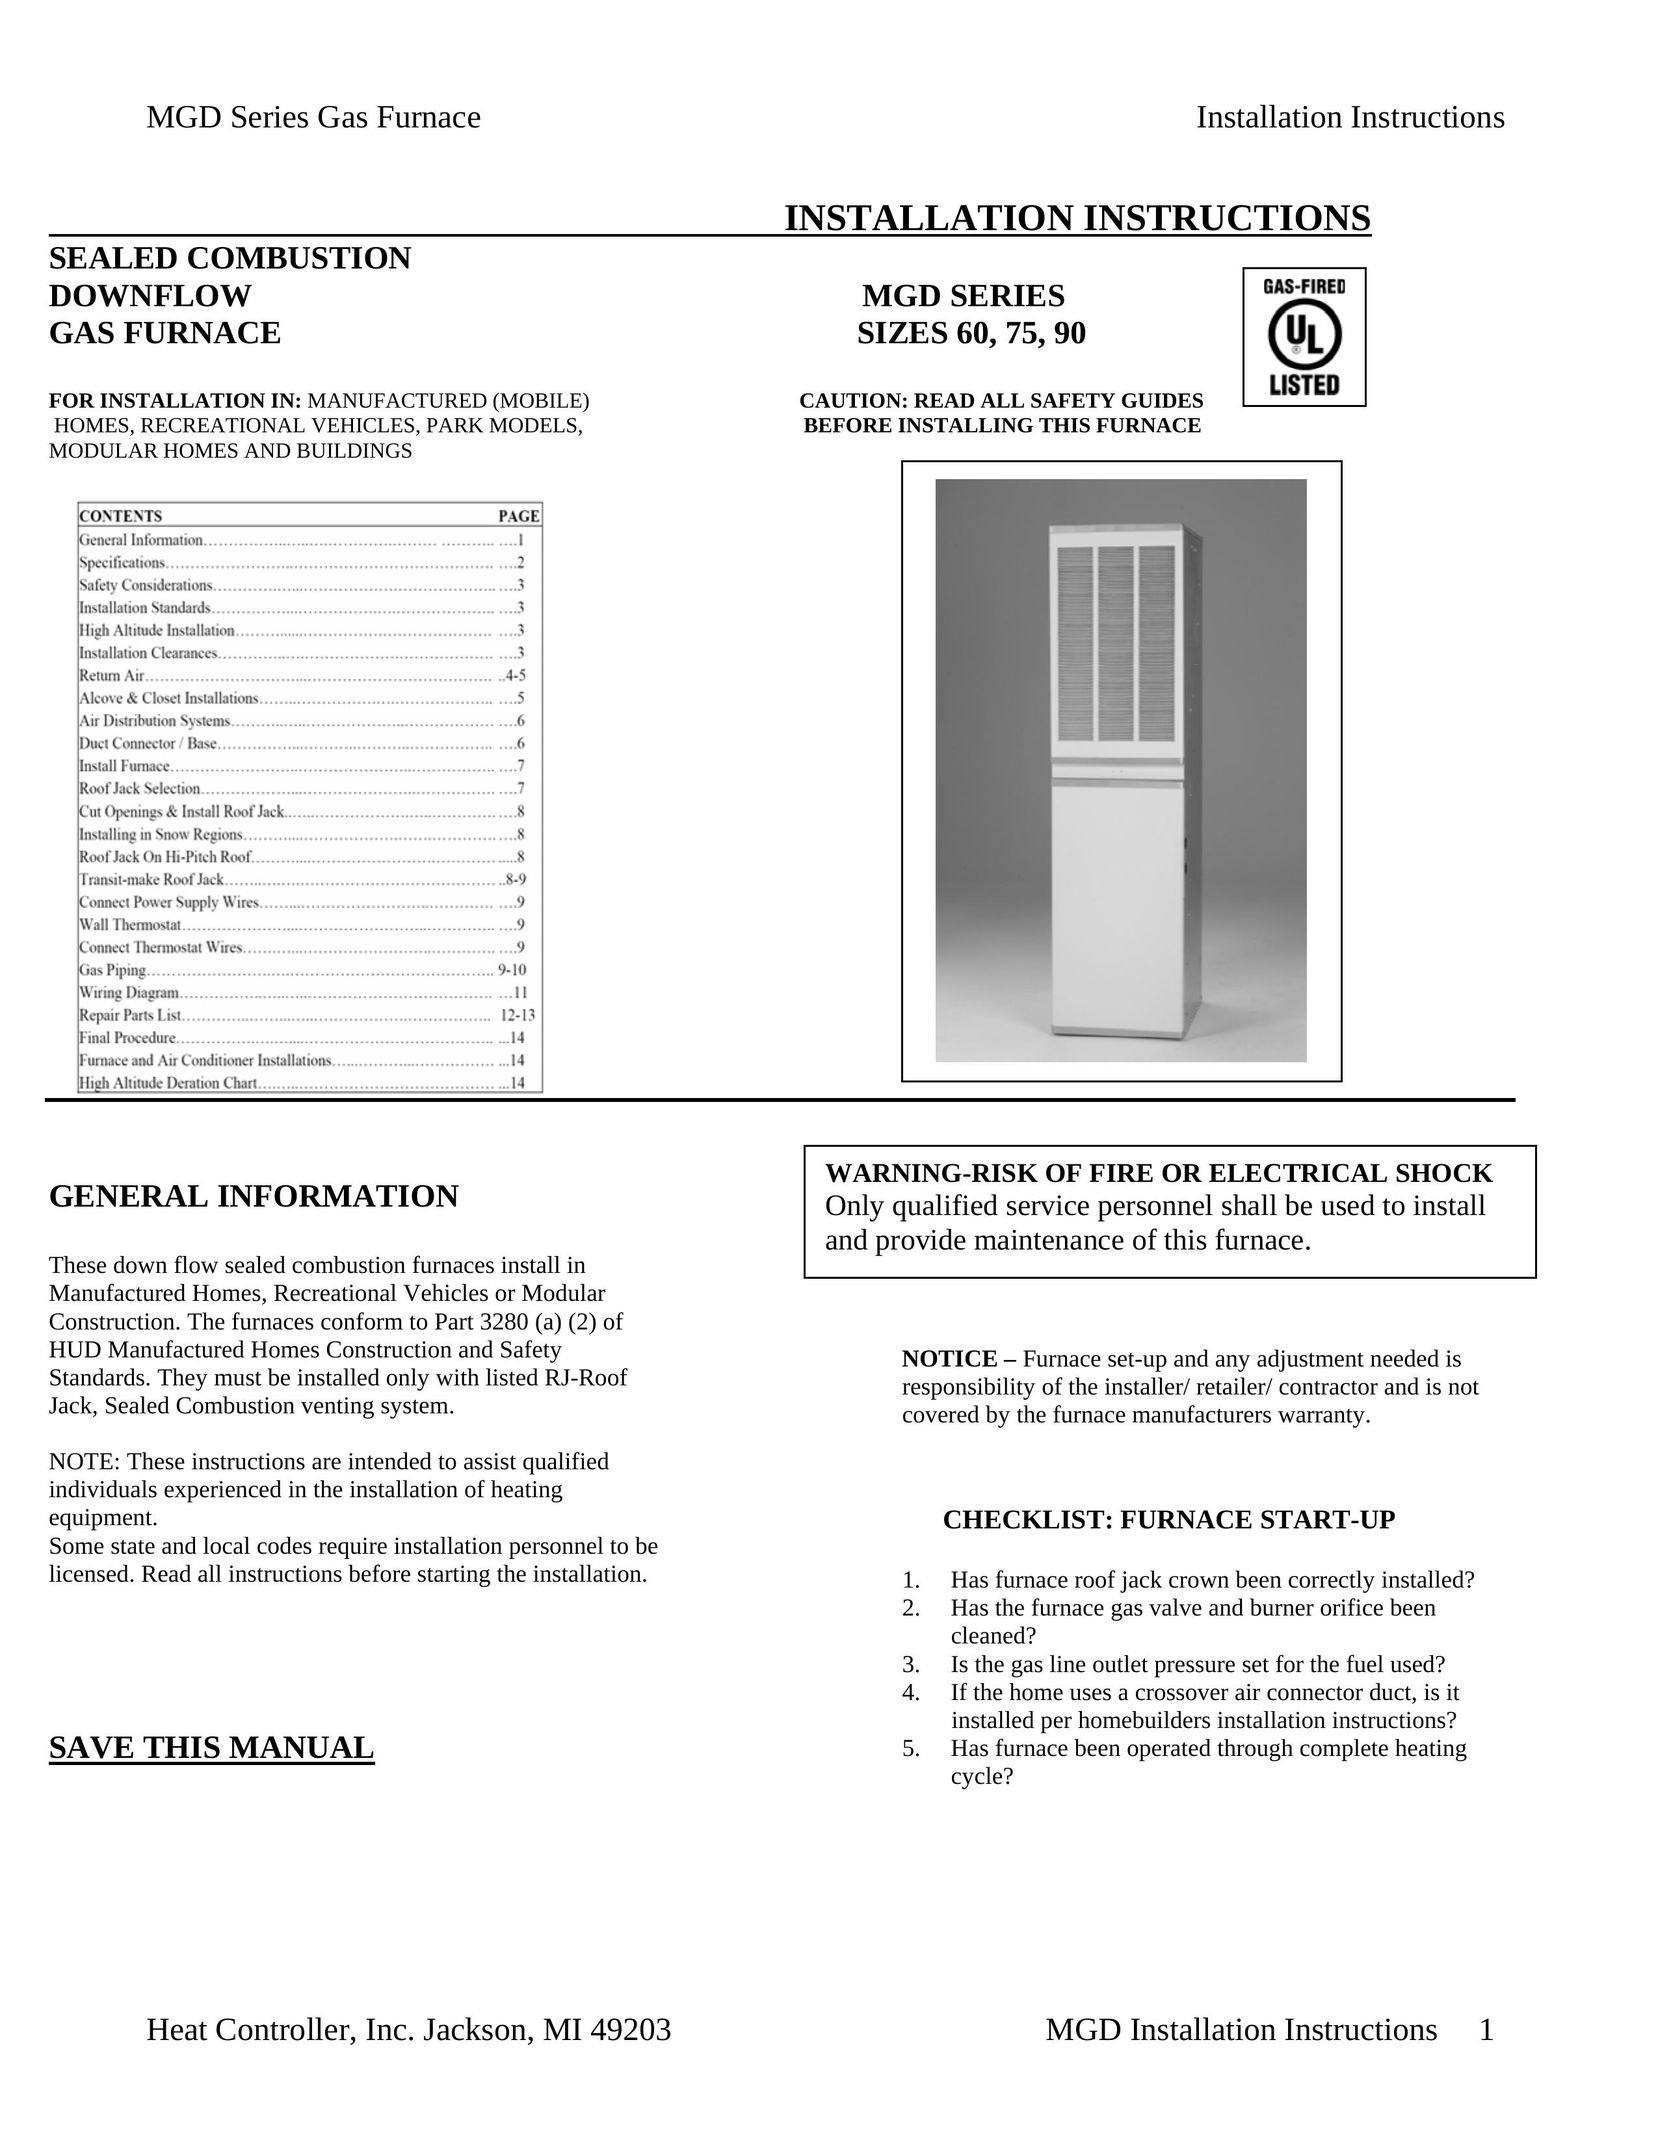 Heat Controller MGD60-E3A Furnace User Manual